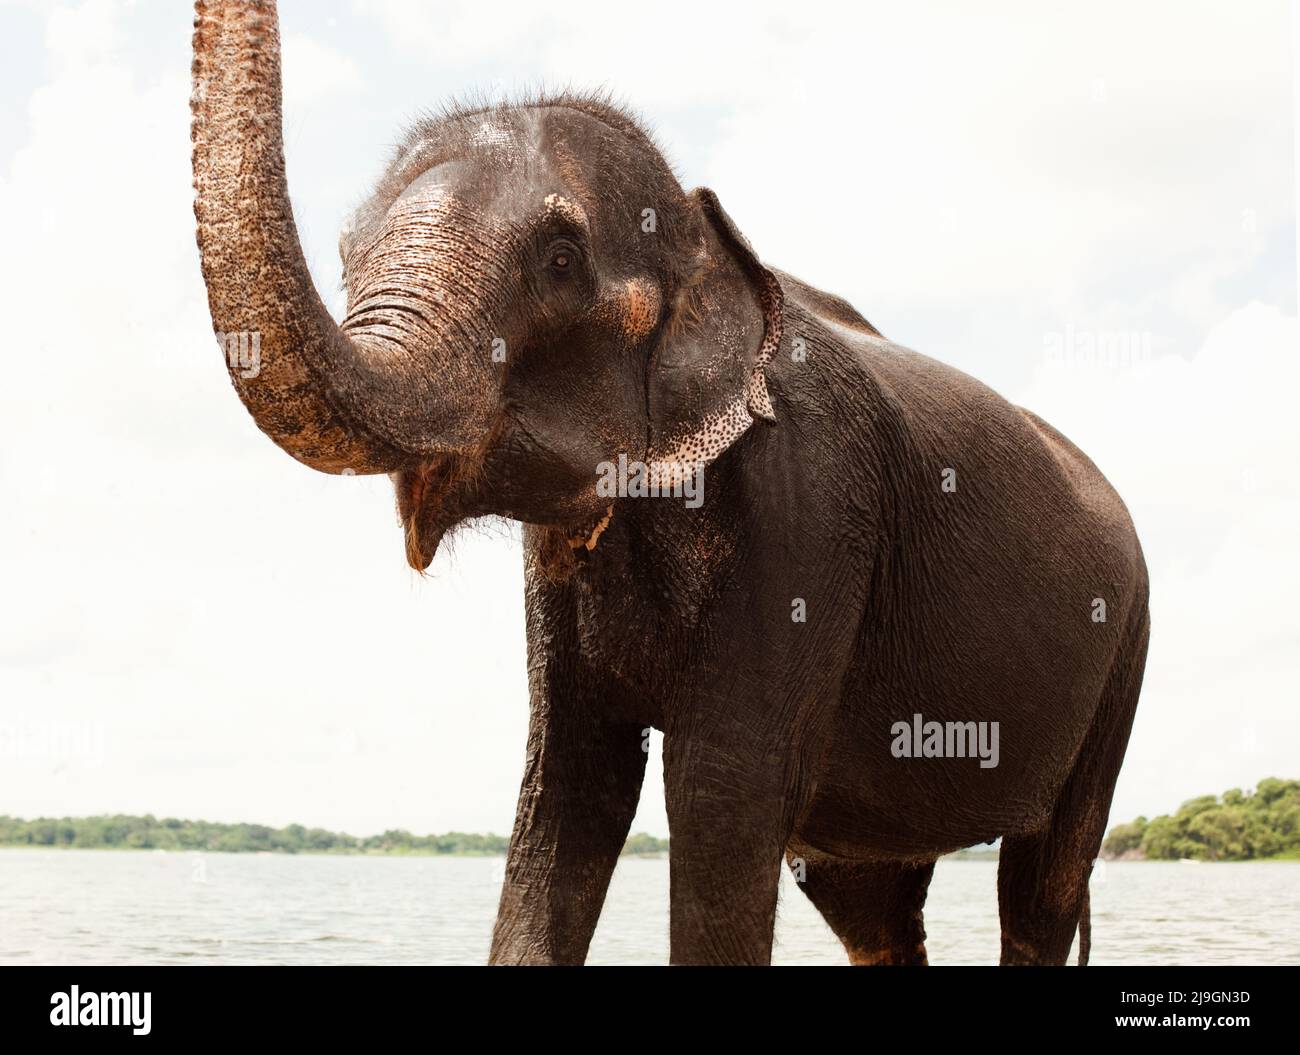 Elephant che si balneano al lago Kandalama, Heritance Kandalama, Sri Lanka. Ran Manika, l'elefante residente, gode il suo bagno quotidiano con il suo mahout Kiriban. Foto Stock